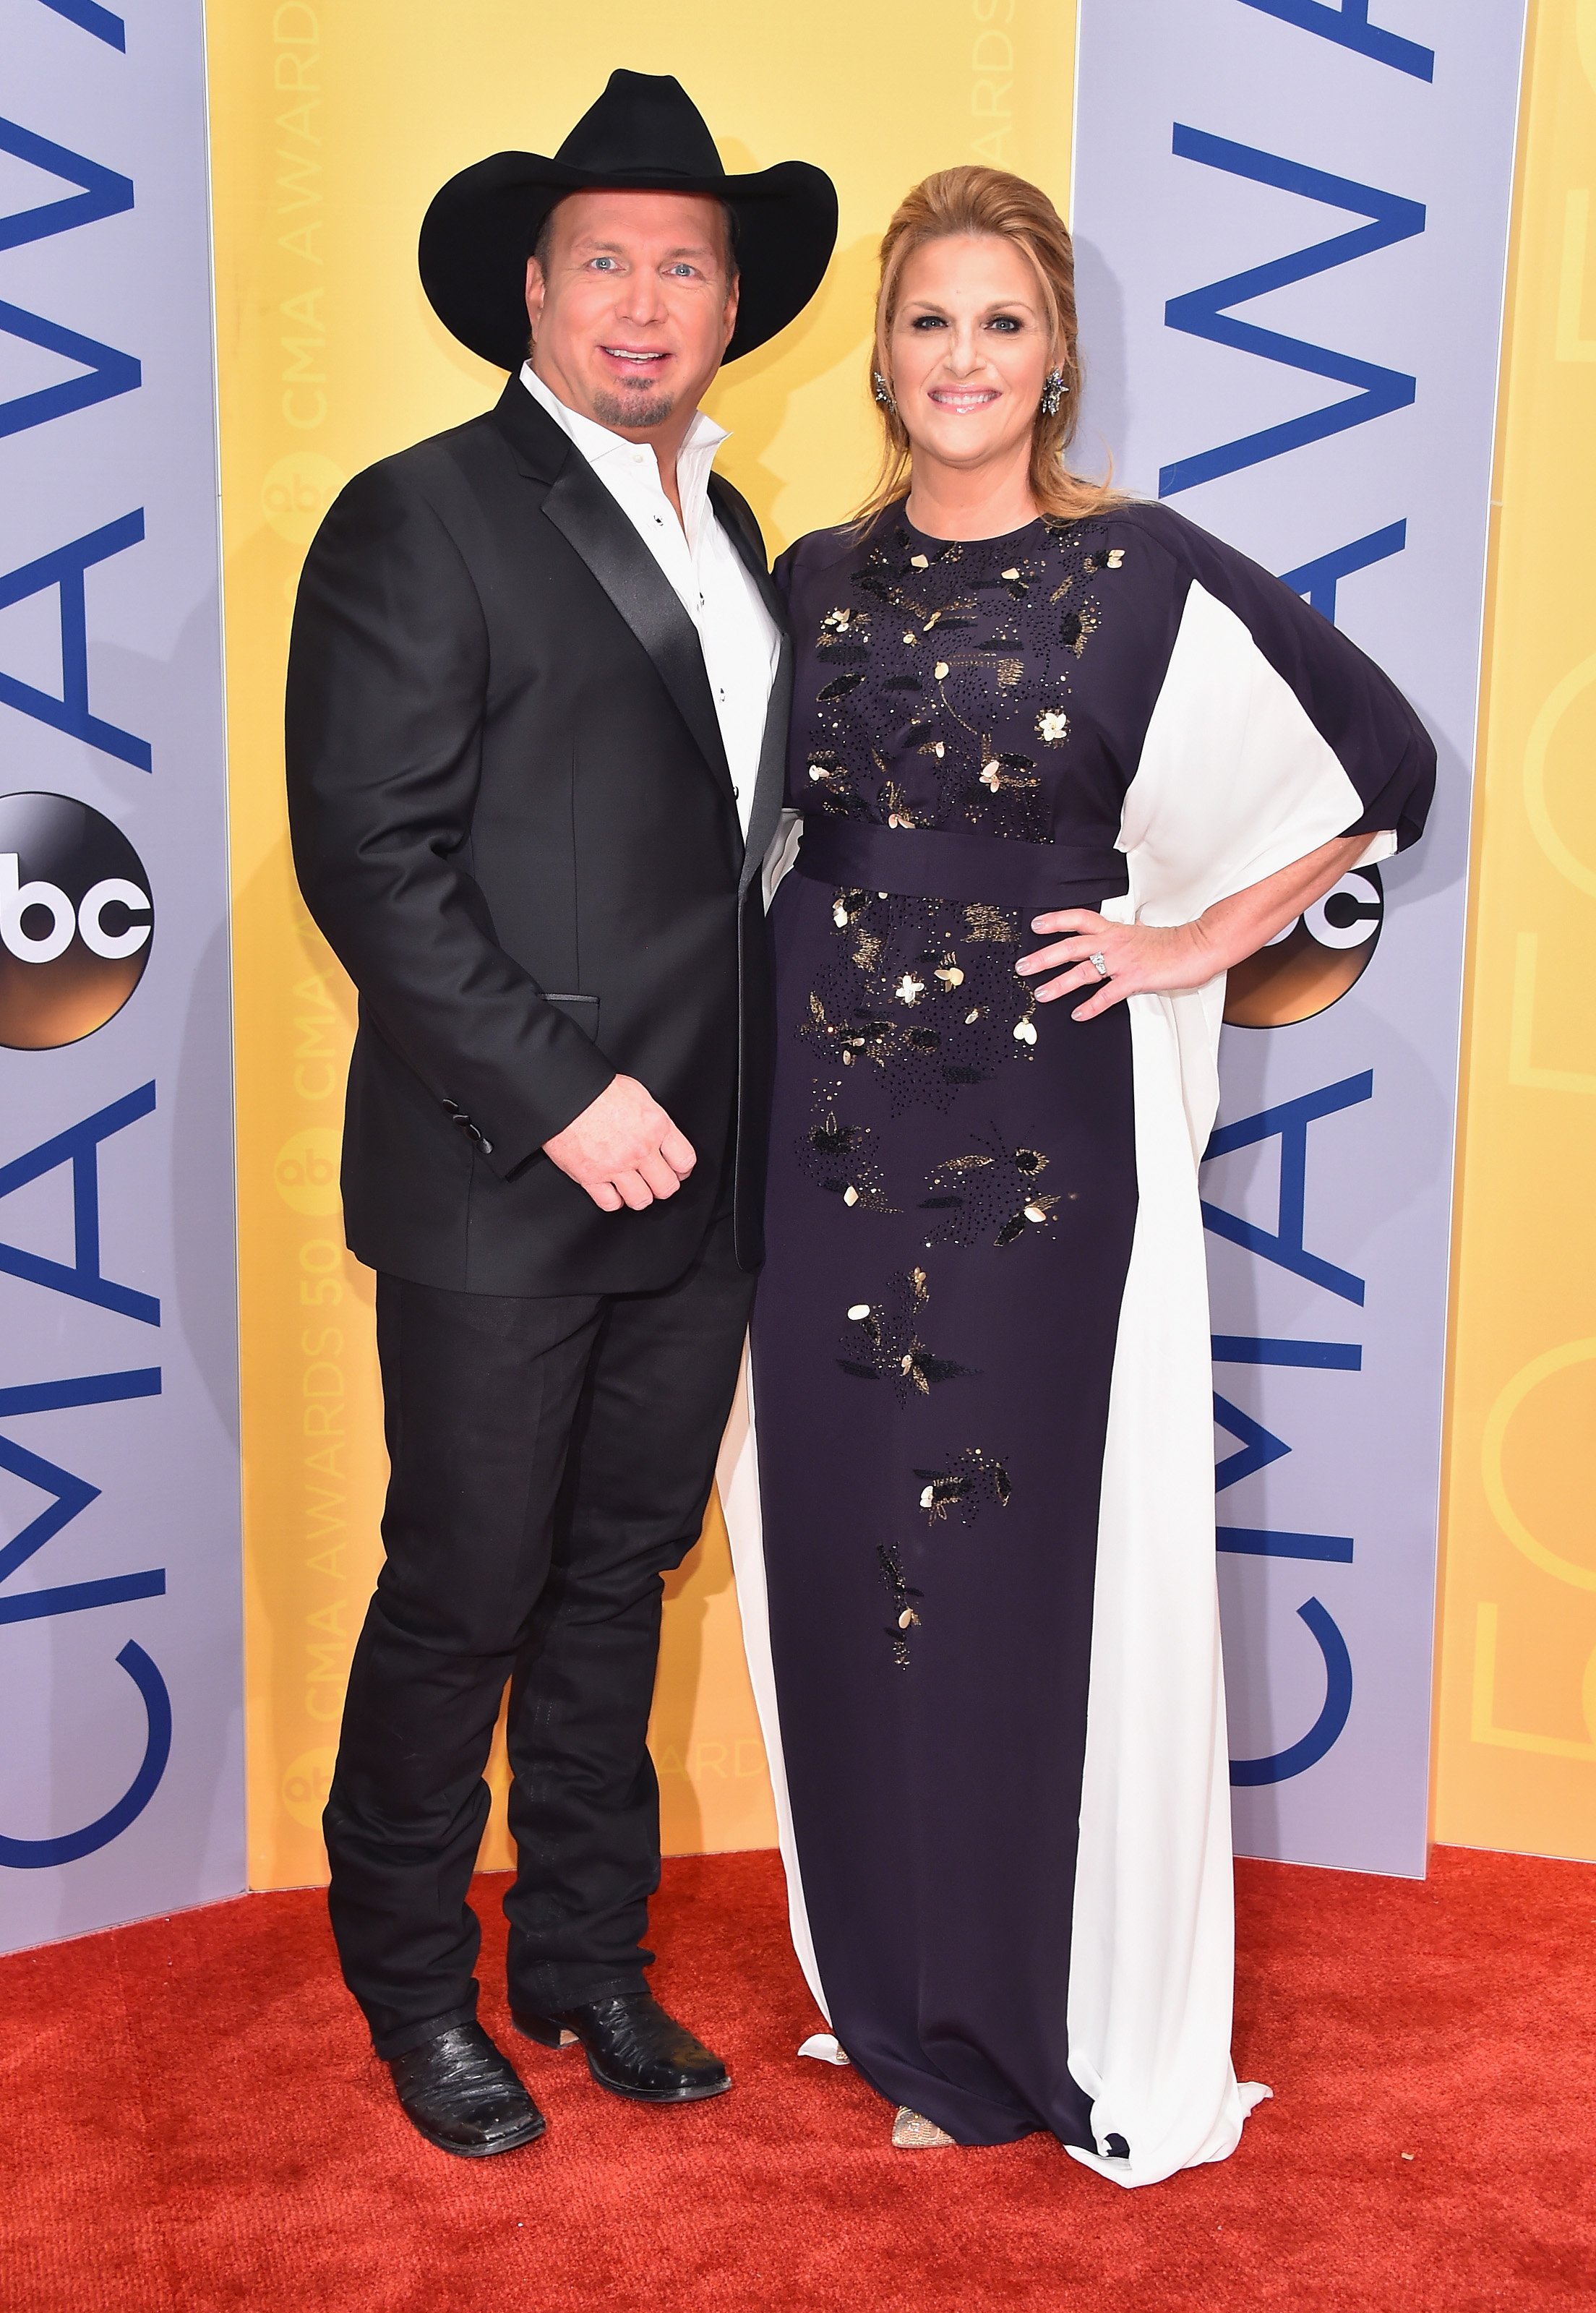 Garth Brooks and Trisha Yearwood attend the 50th annual CMA Awards at the Bridgestone Arena on November 2, 2016 in Nashville